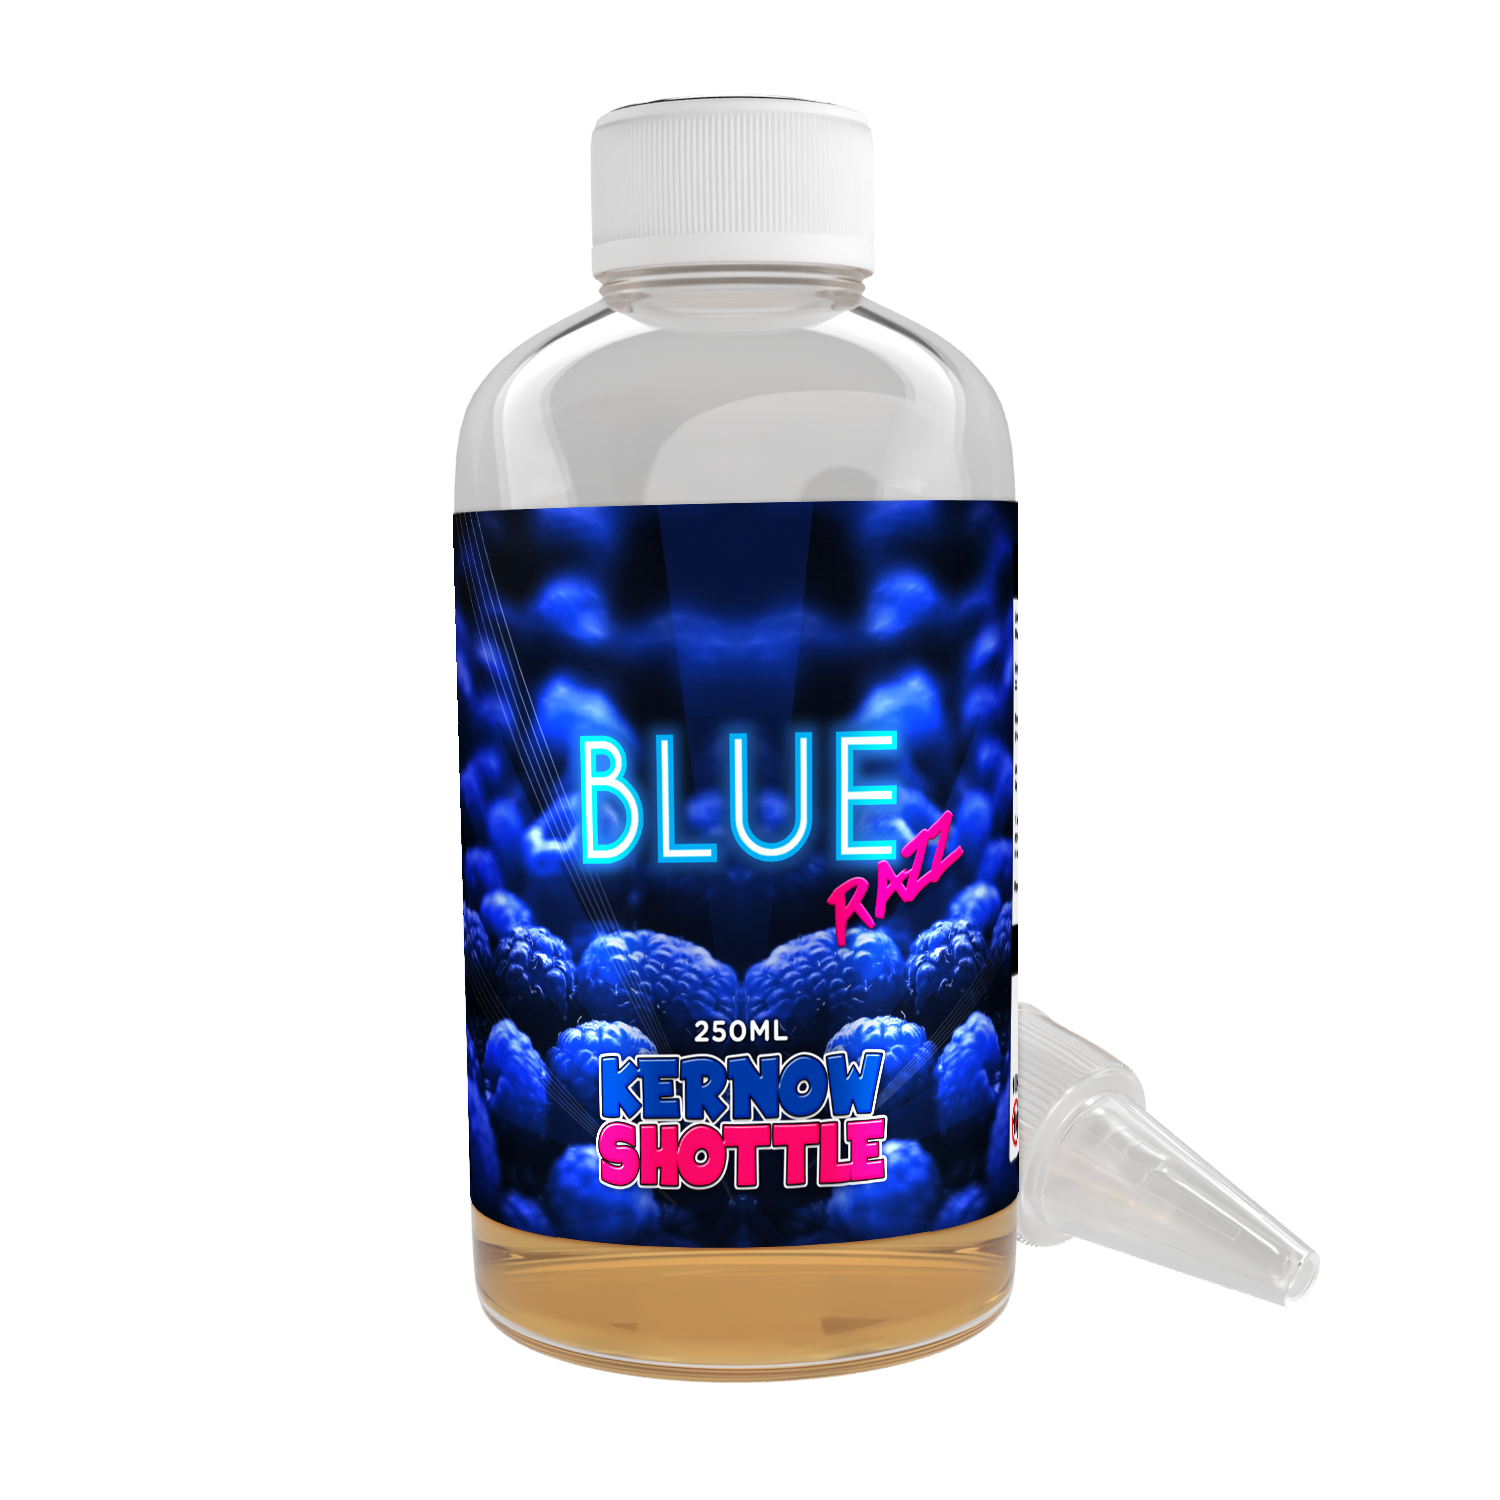 Blue Raz Shottle Flavour Shot by Kernow - 250ml